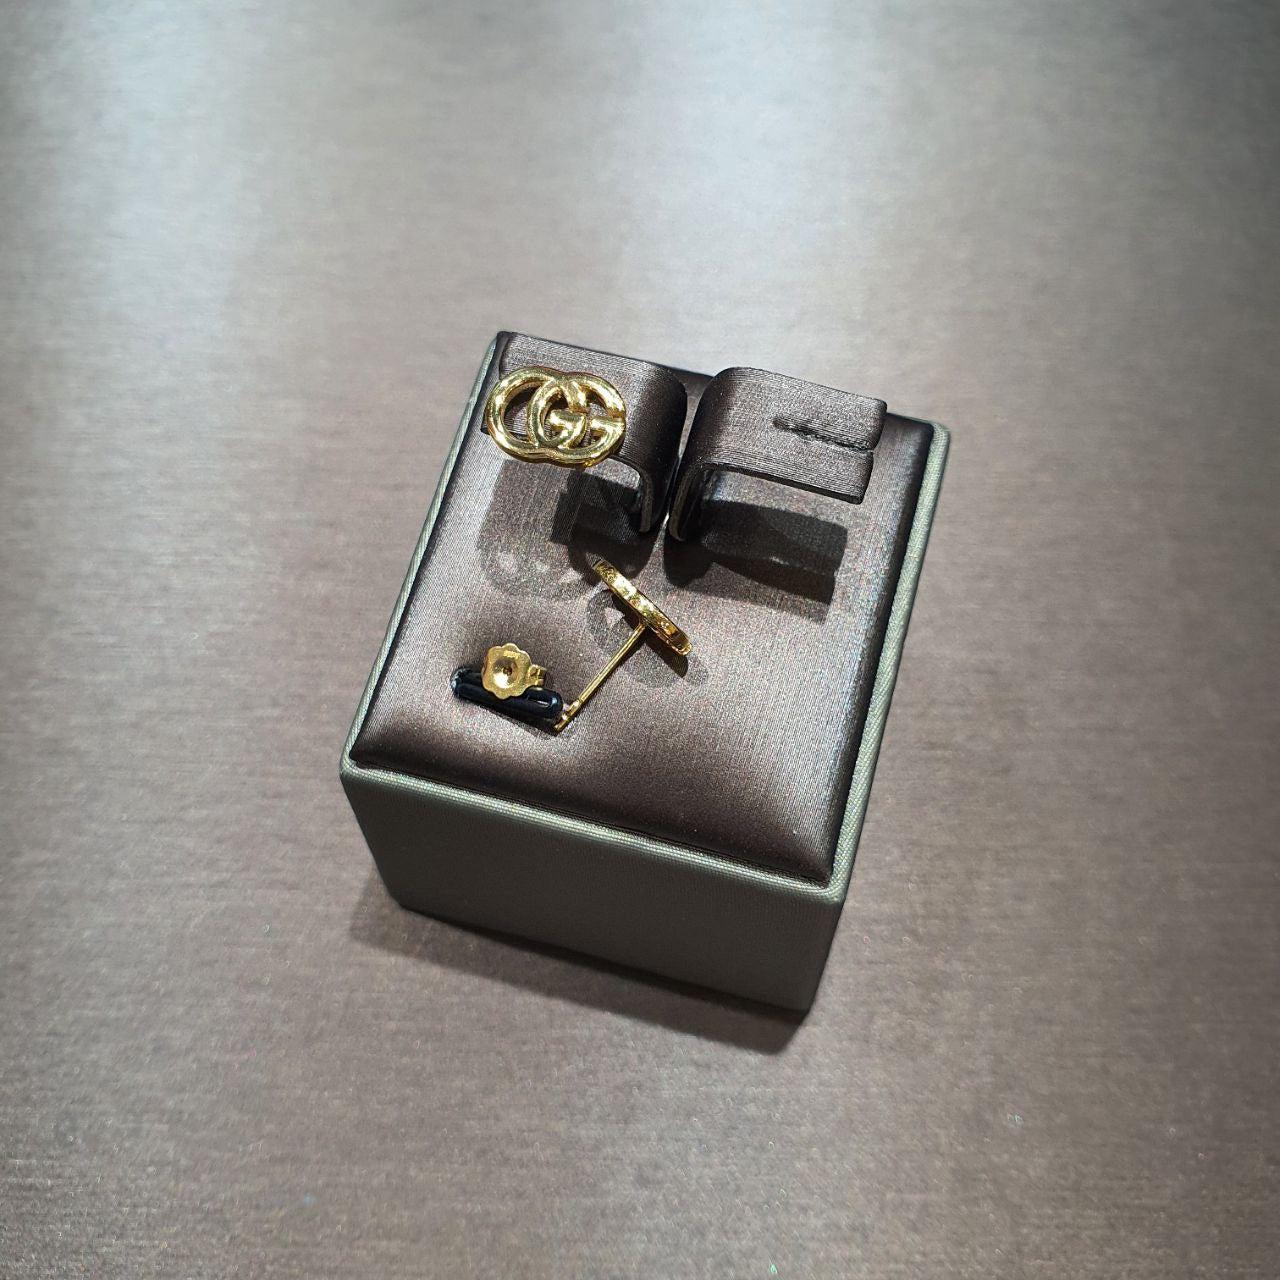 22k / 916 Gold GG Design Earring-Earrings-Best Gold Shop